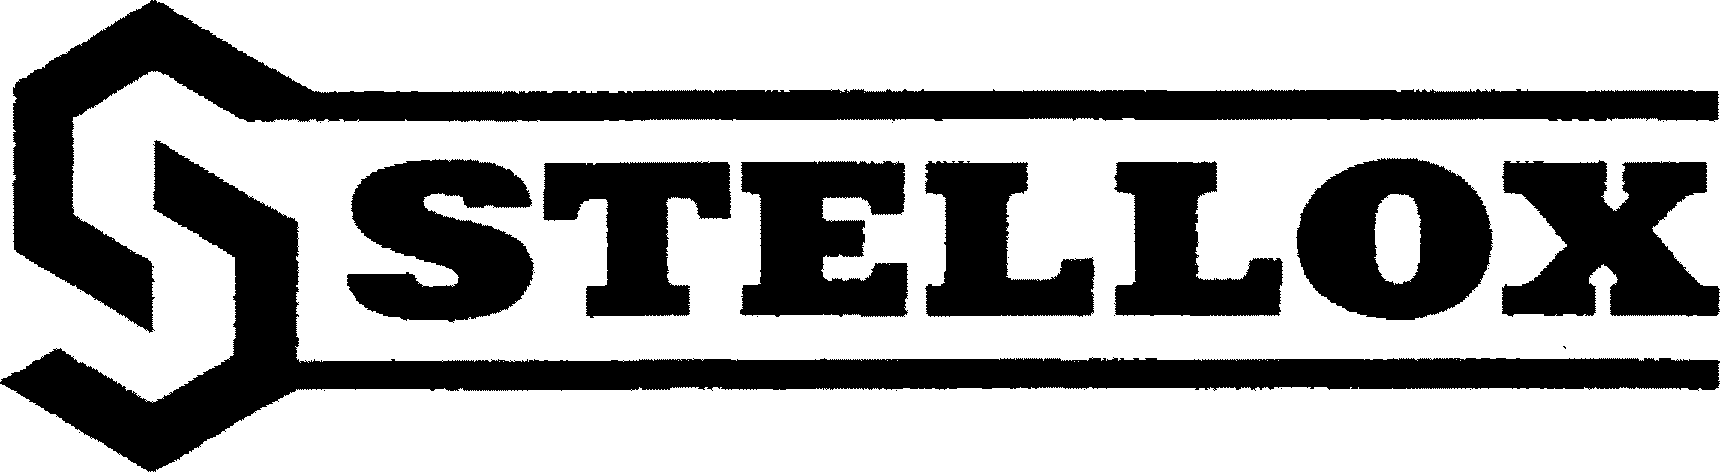 Logo Stellox